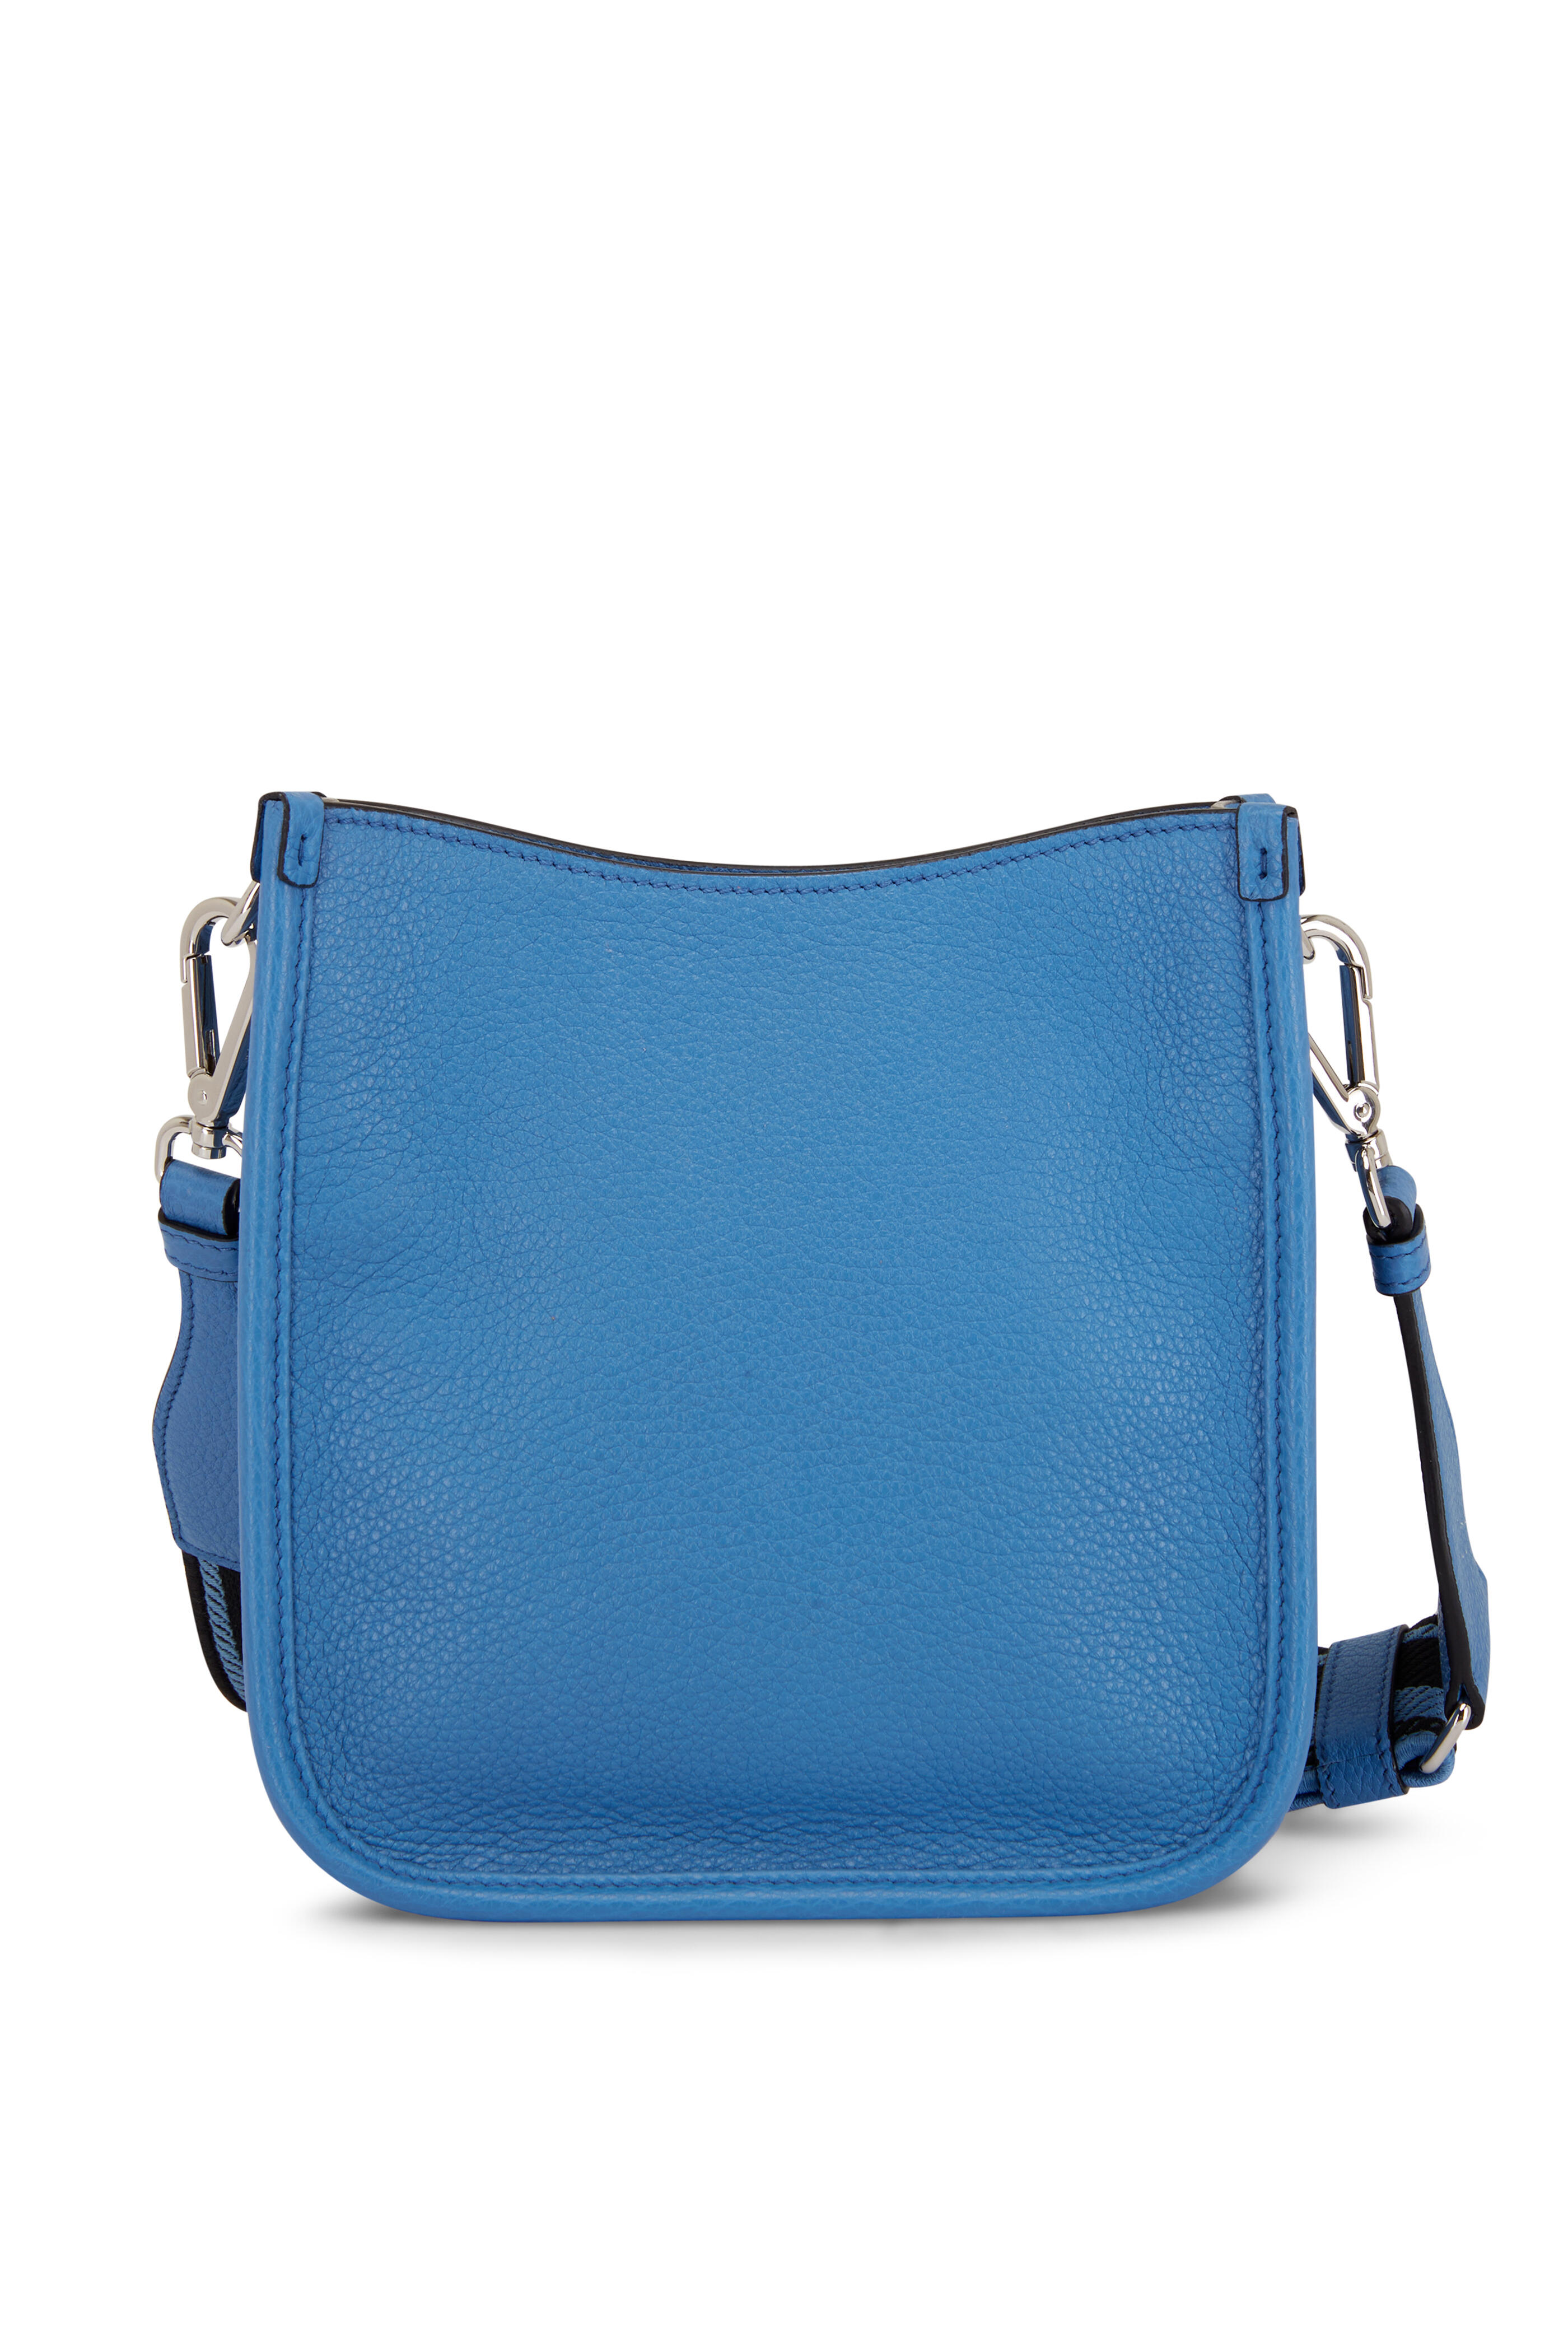 Prada - Flou Blue Leather Mini Shoulder Bag | Mitchell Stores